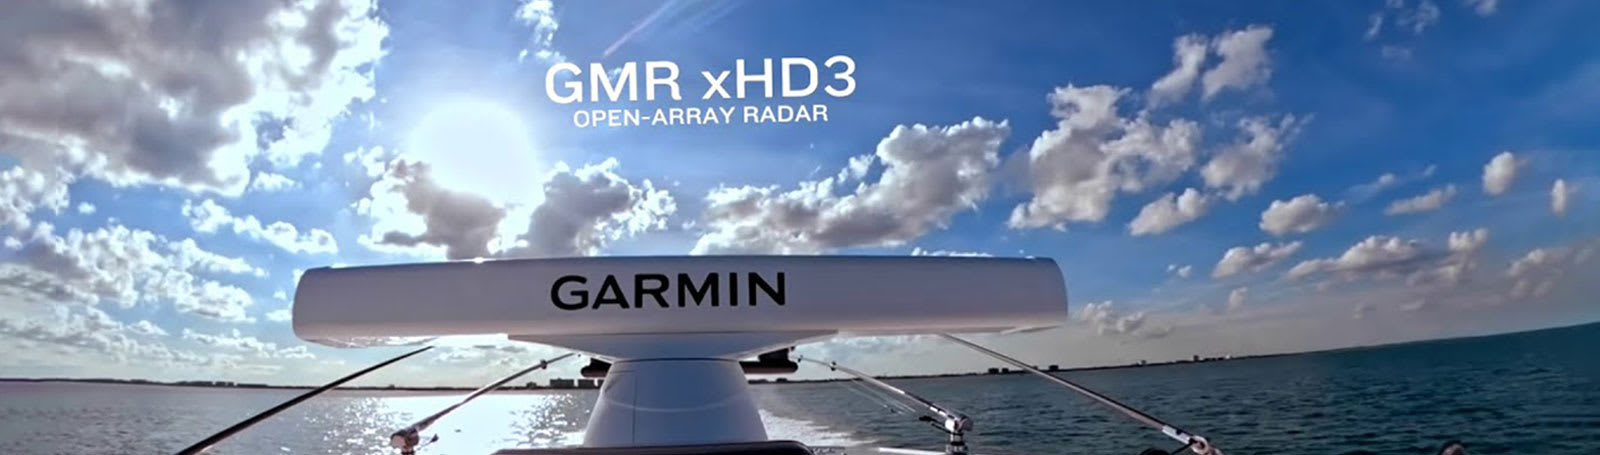 GMR xHD3 Open Array Radars